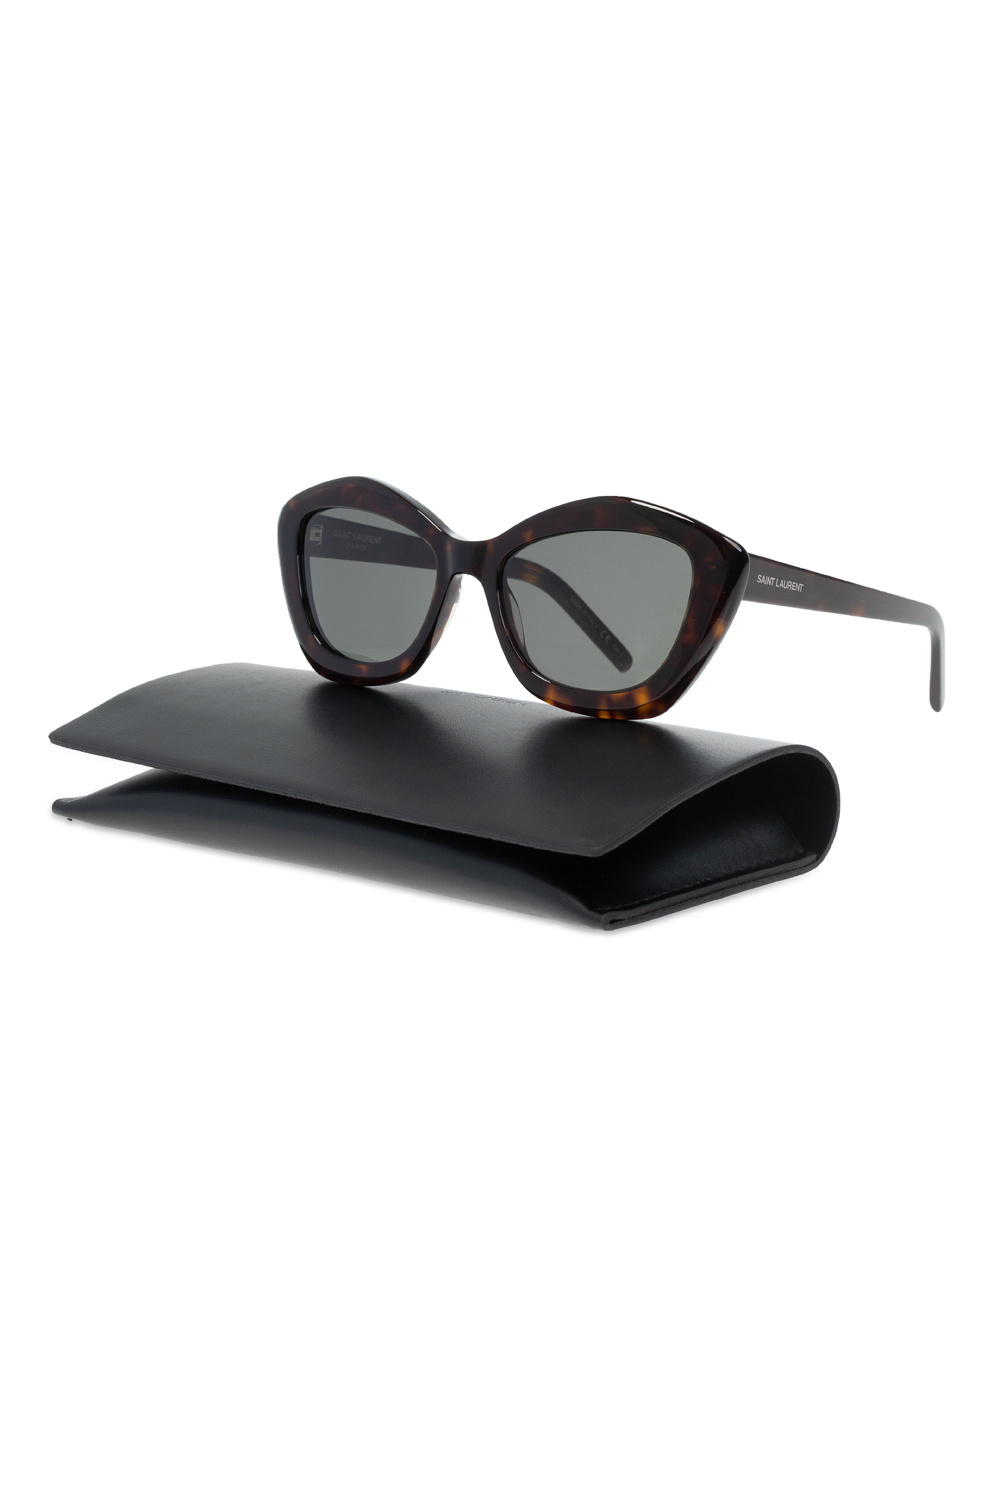 Saint Laurent ‘SL 68’ Bonila sunglasses